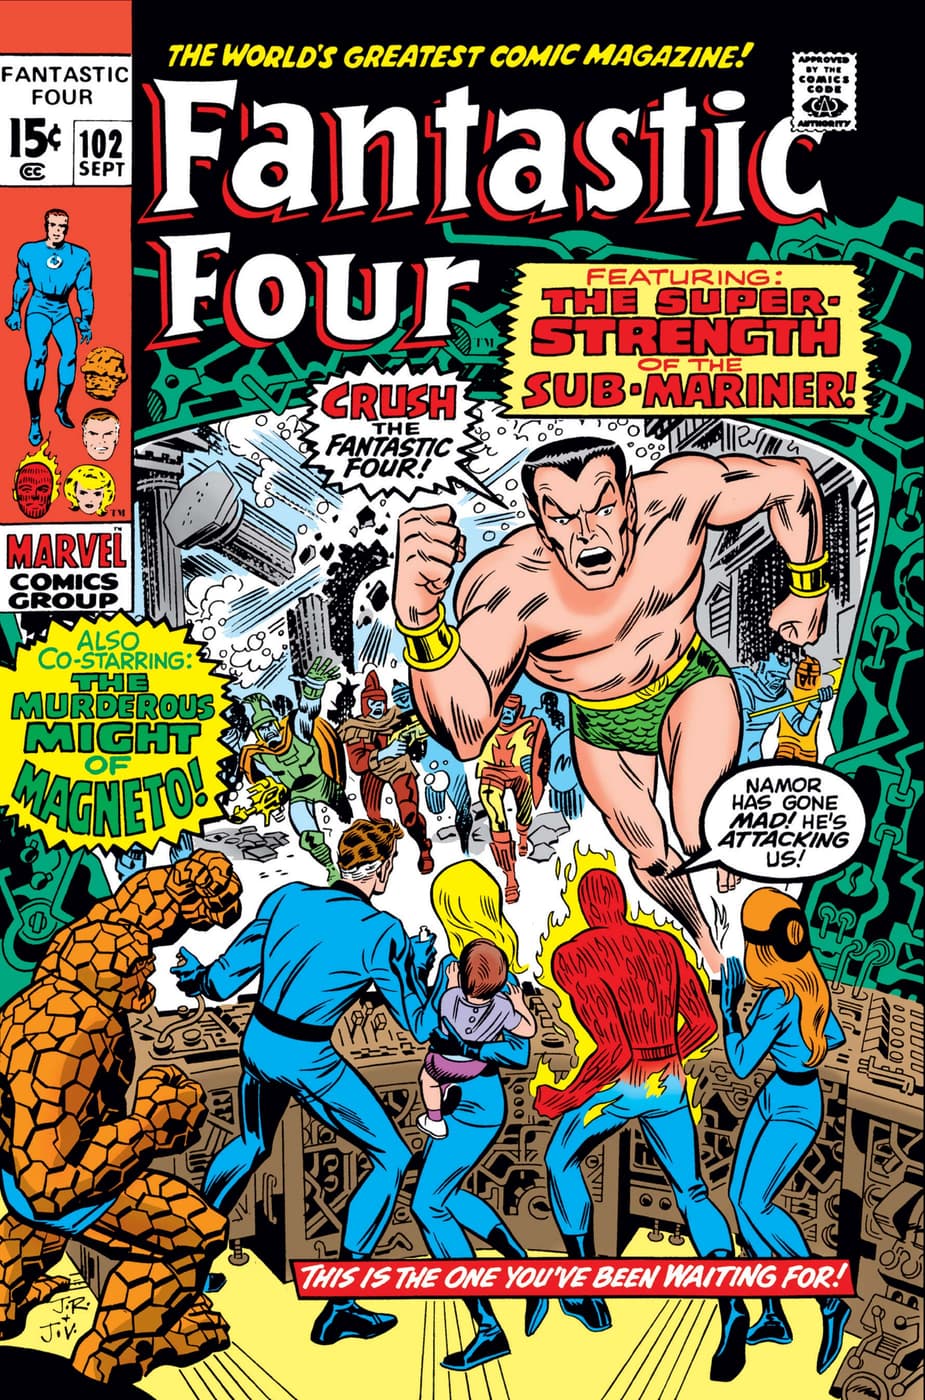  'Fantastic Four' #102